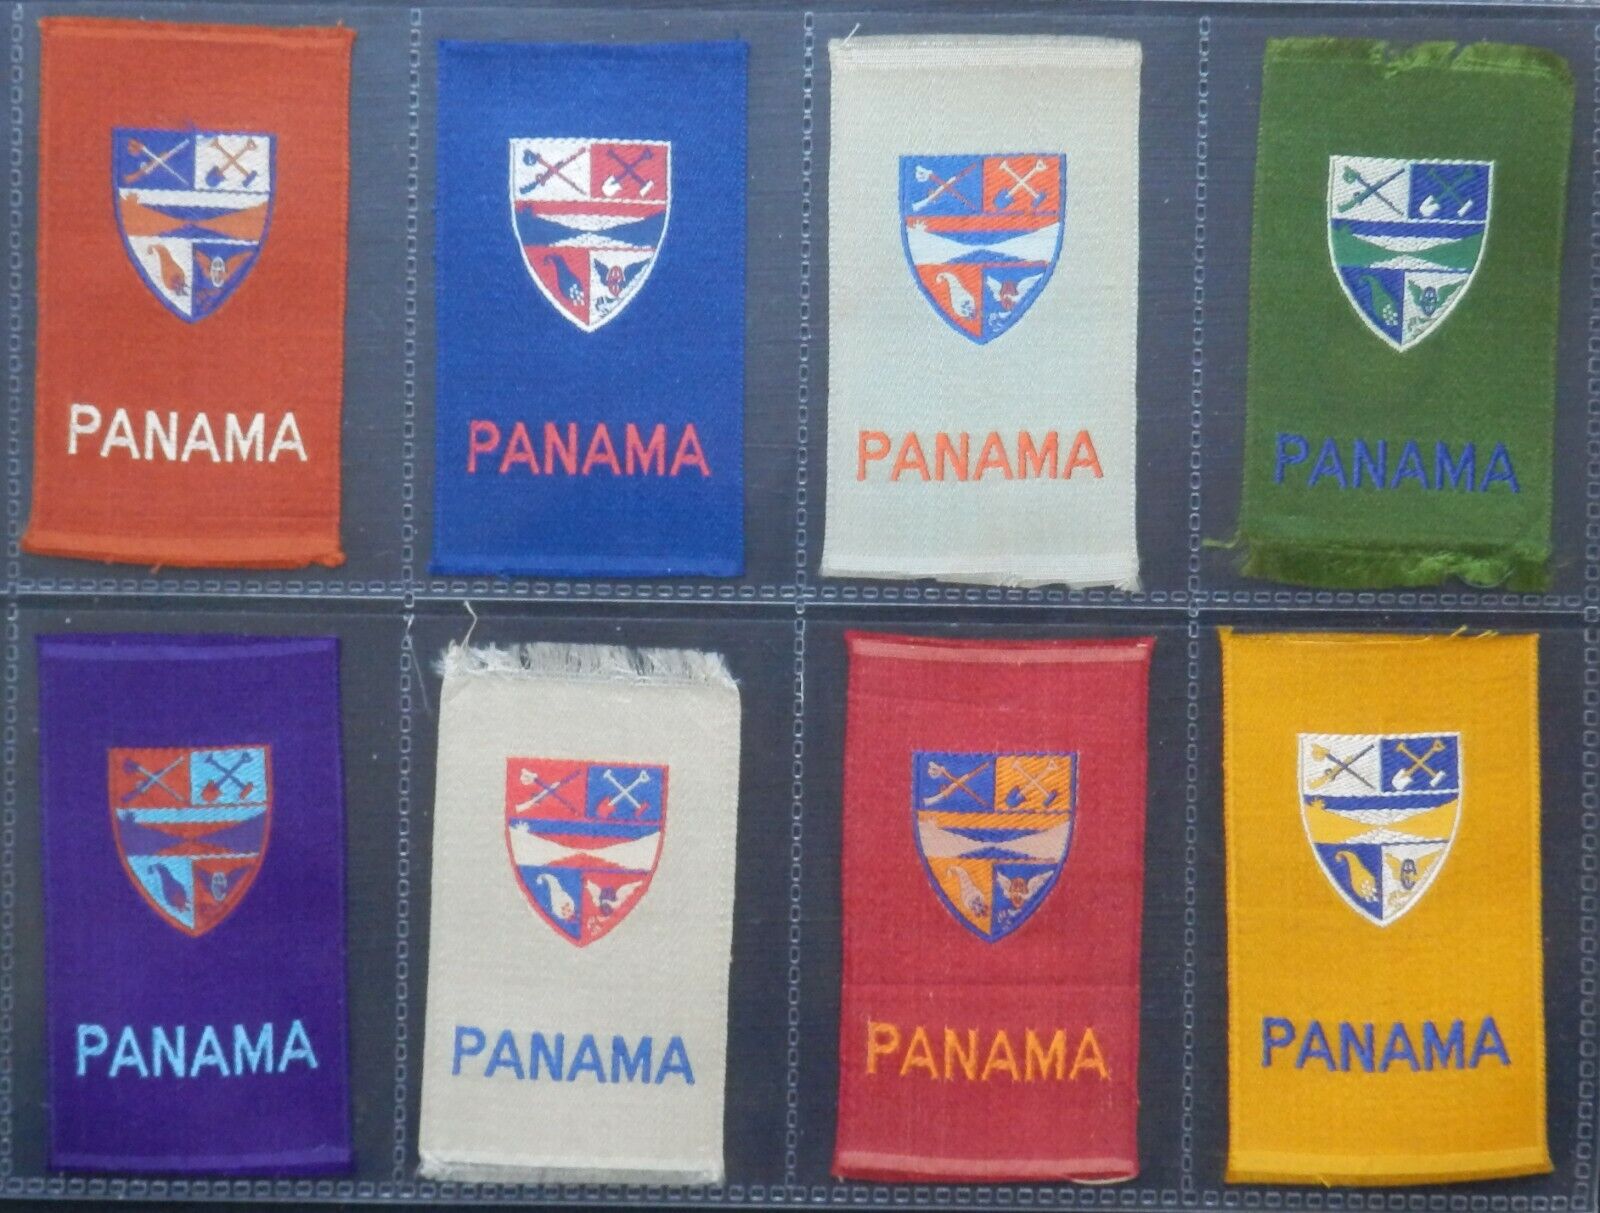 PANAMA Rare all COLOURS Canadian Miscellany Woven Silks SC12